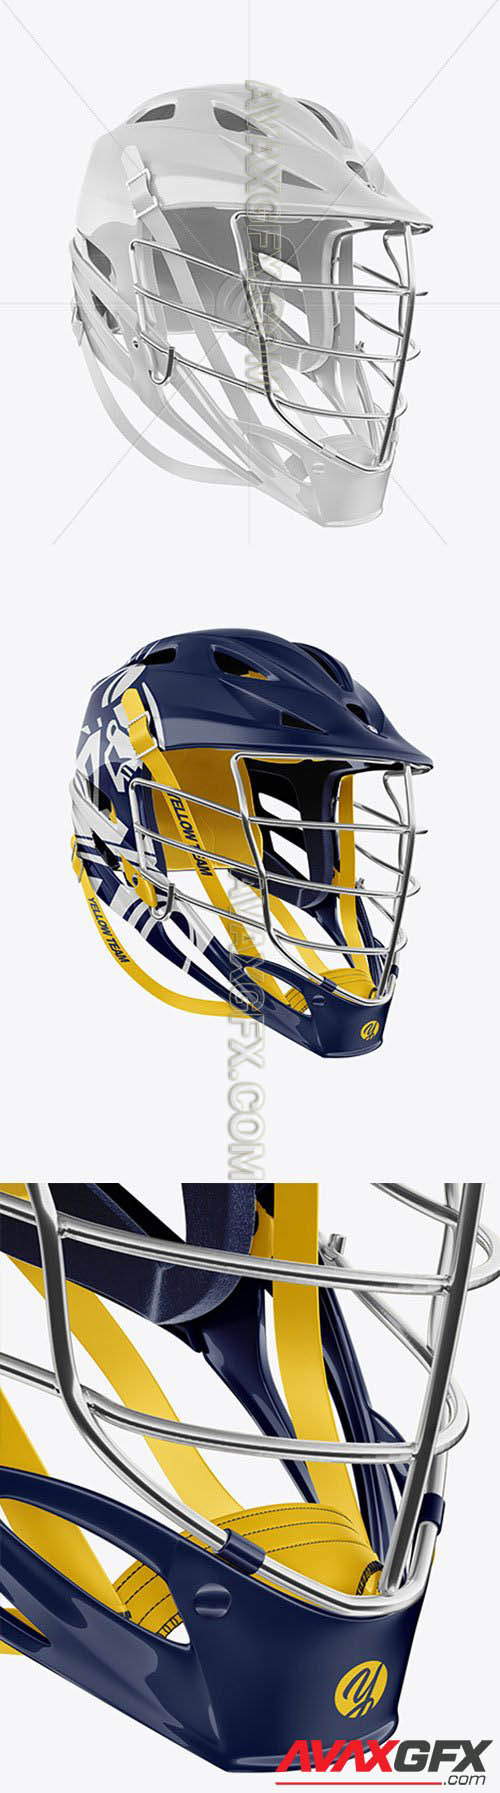 Lacrosse Helmet Mockup 61283